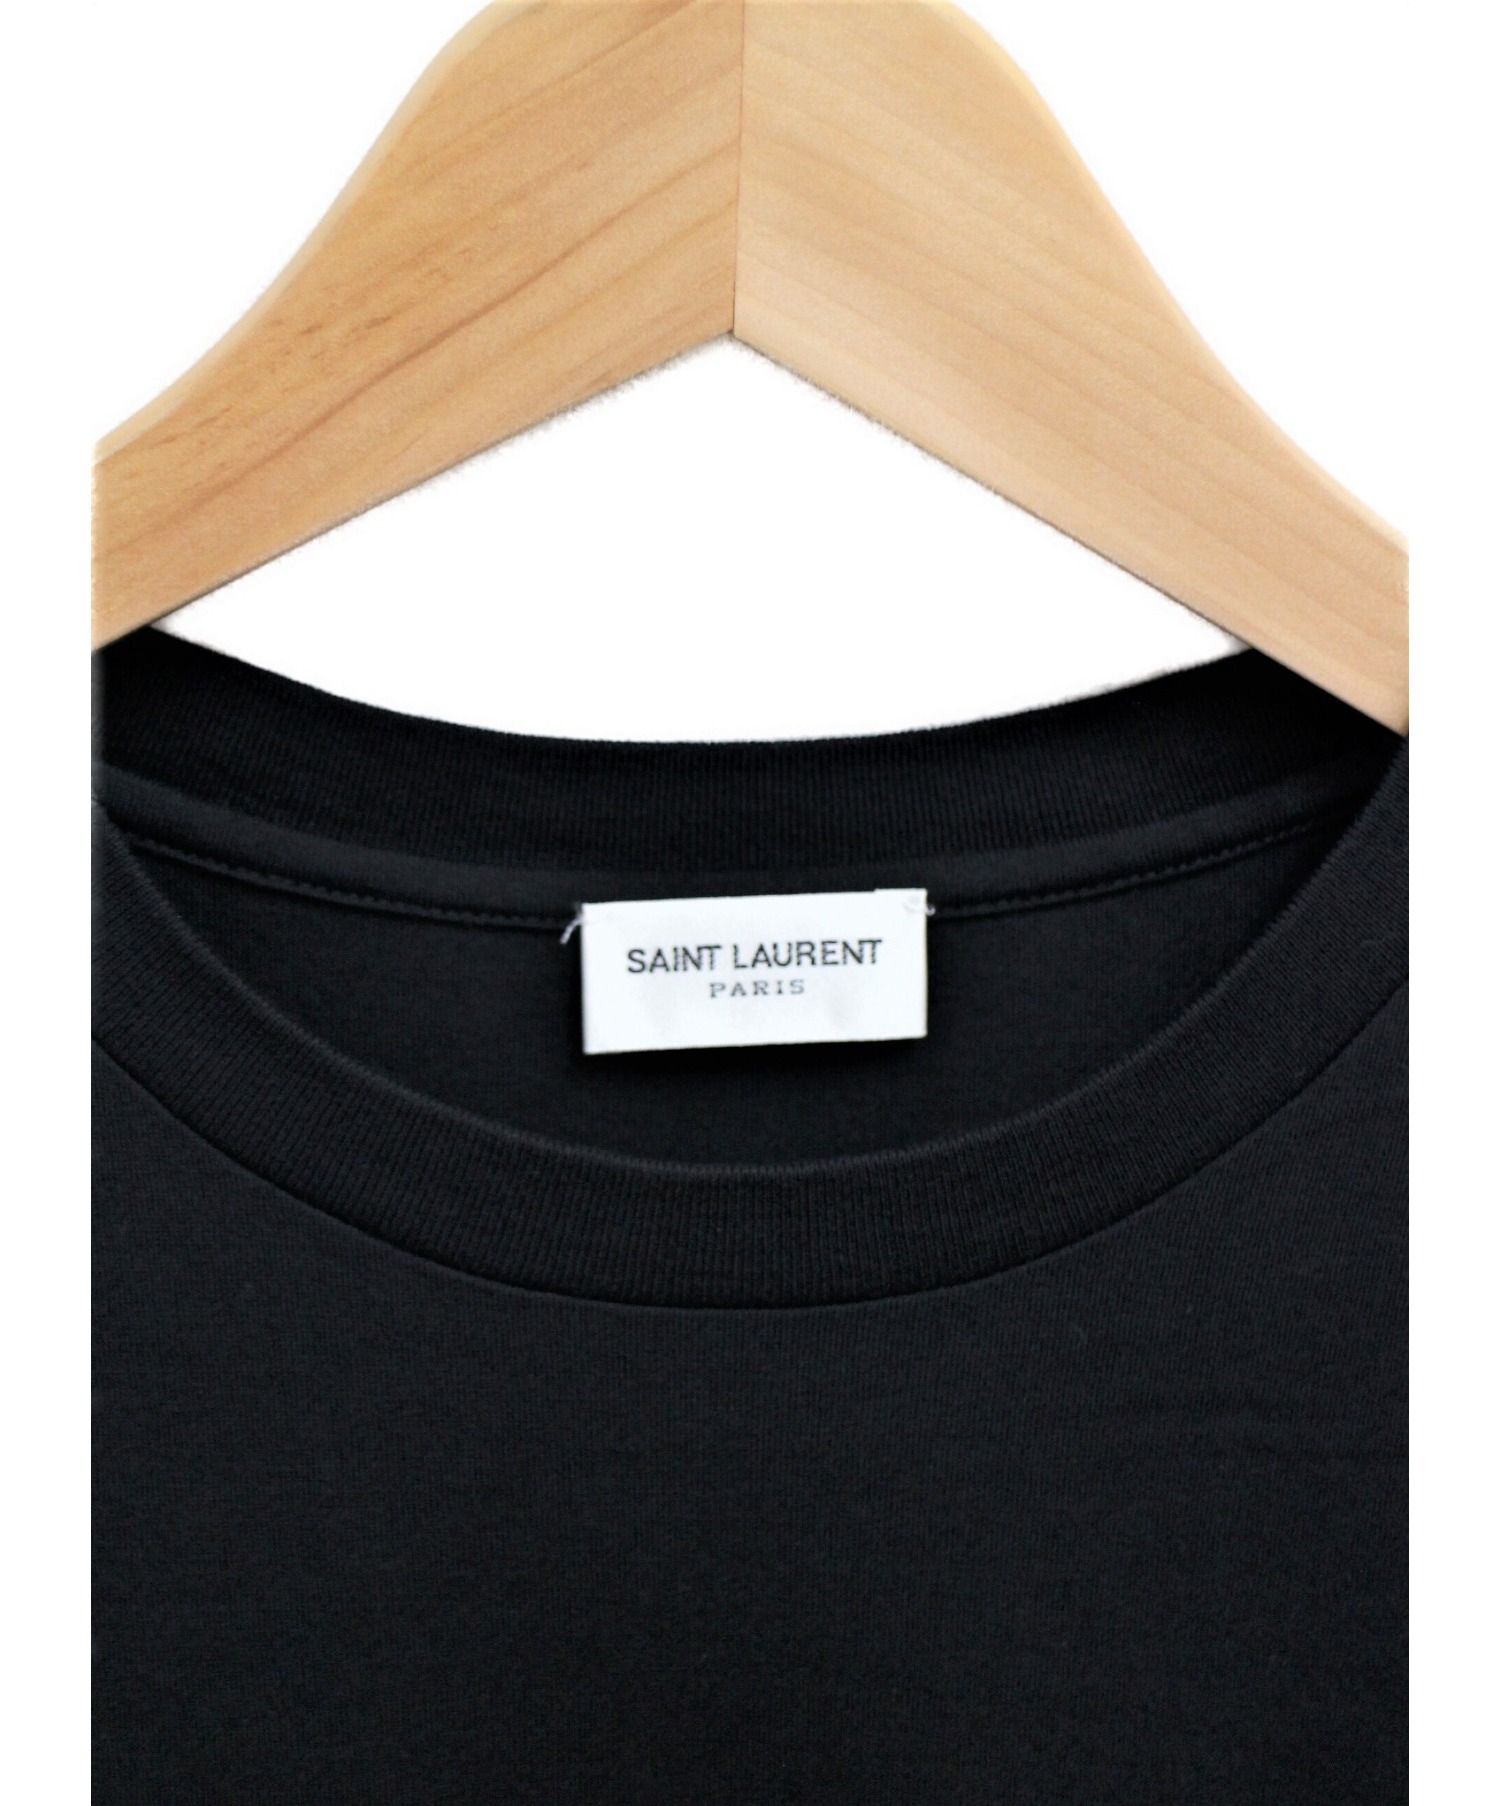 Saint Laurent Paris (サンローランパリ) ミニロゴTシャツ ブラック サイズ:XS